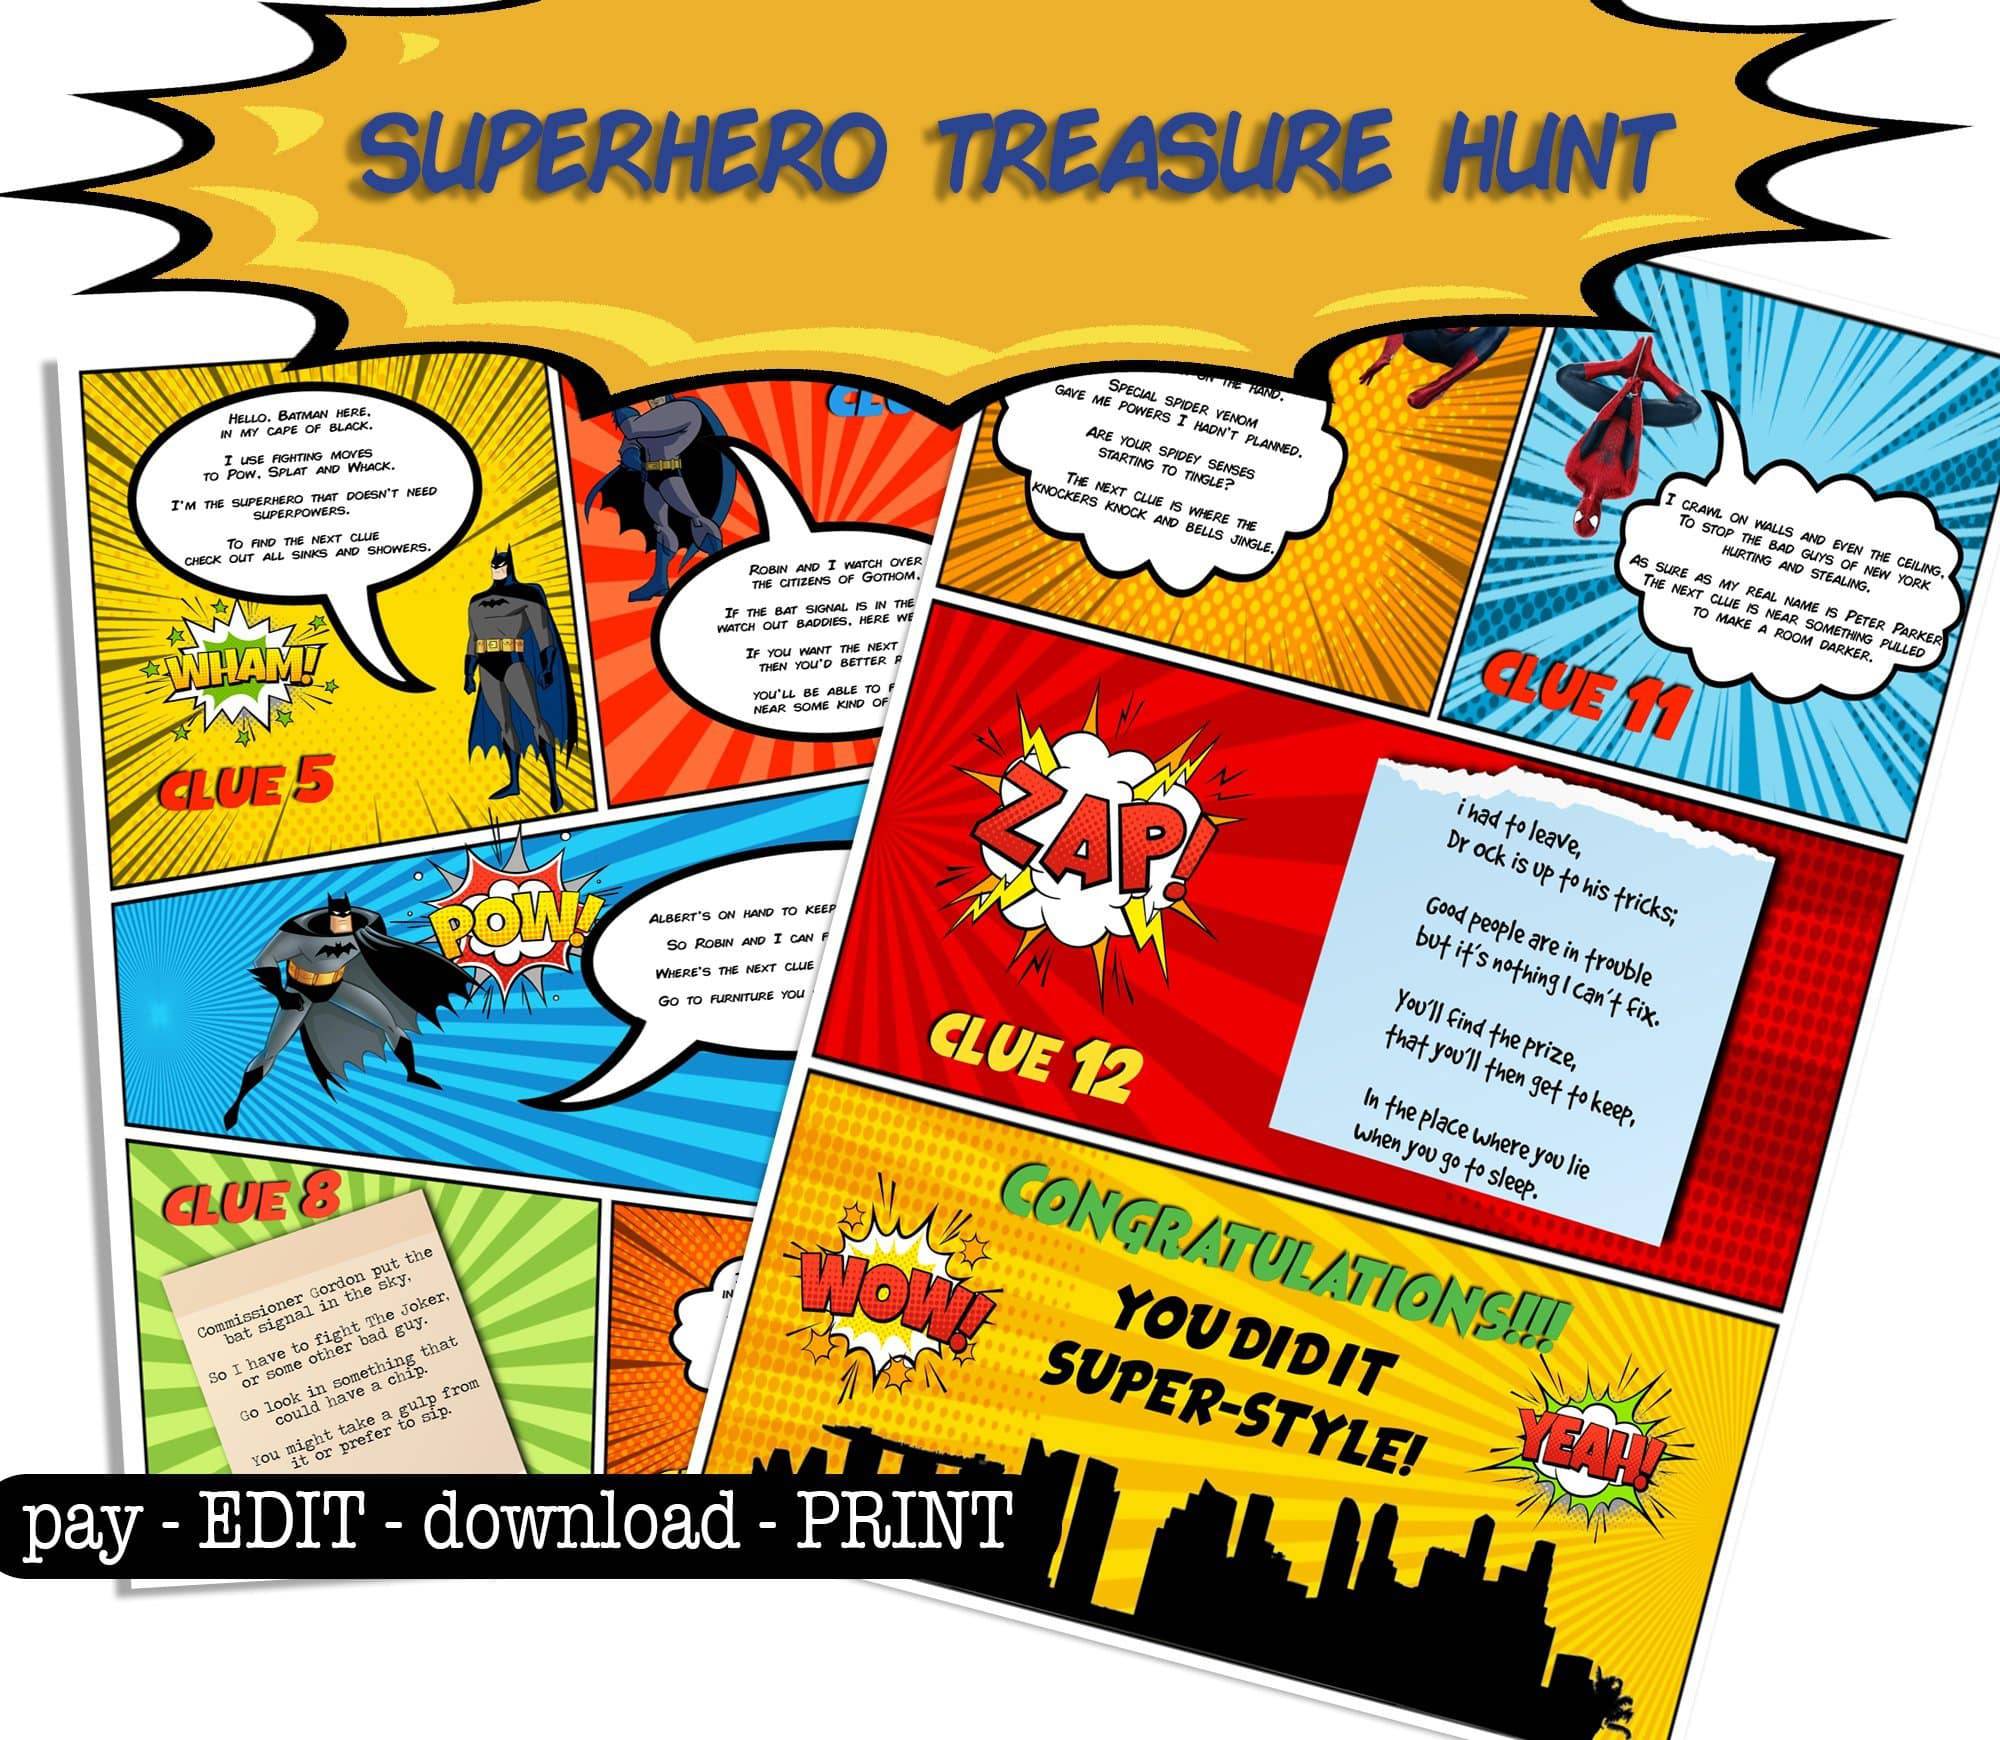 Superhero Treasure Hunt Clues - Open Chests